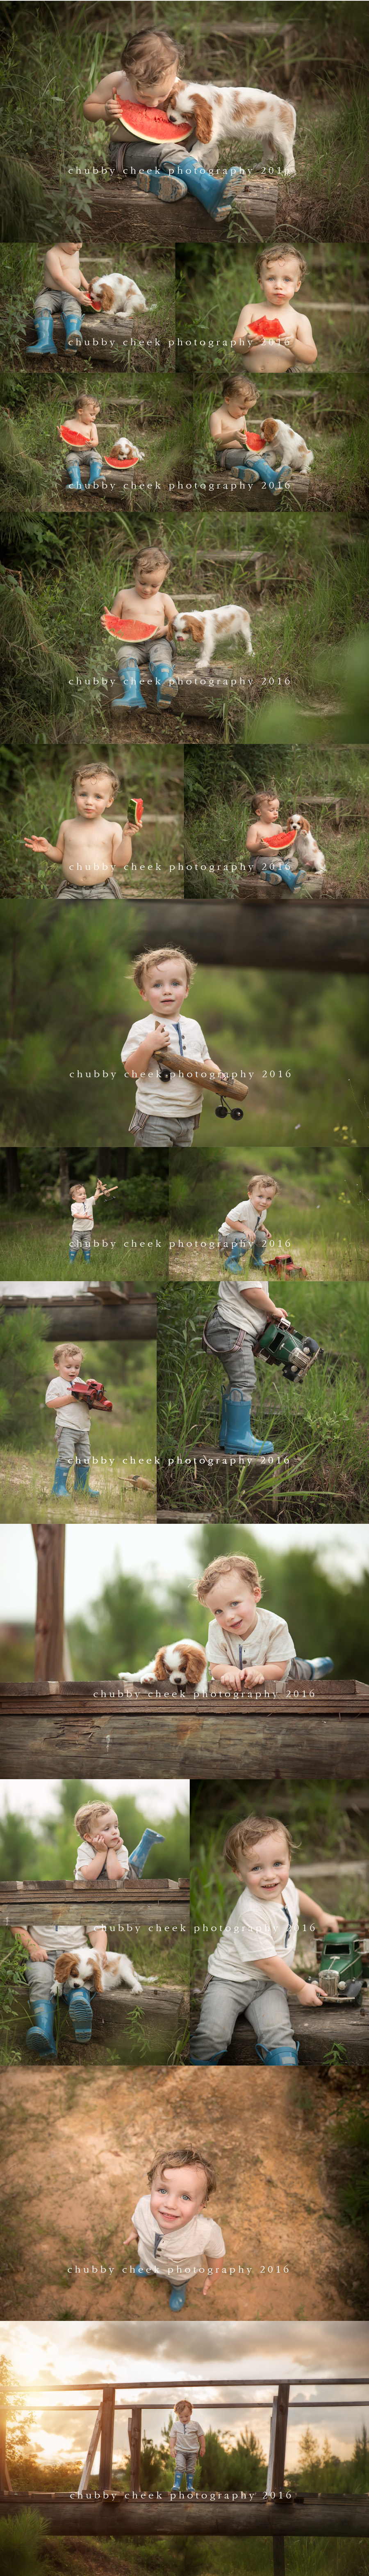 the woodlands texas child photographer 